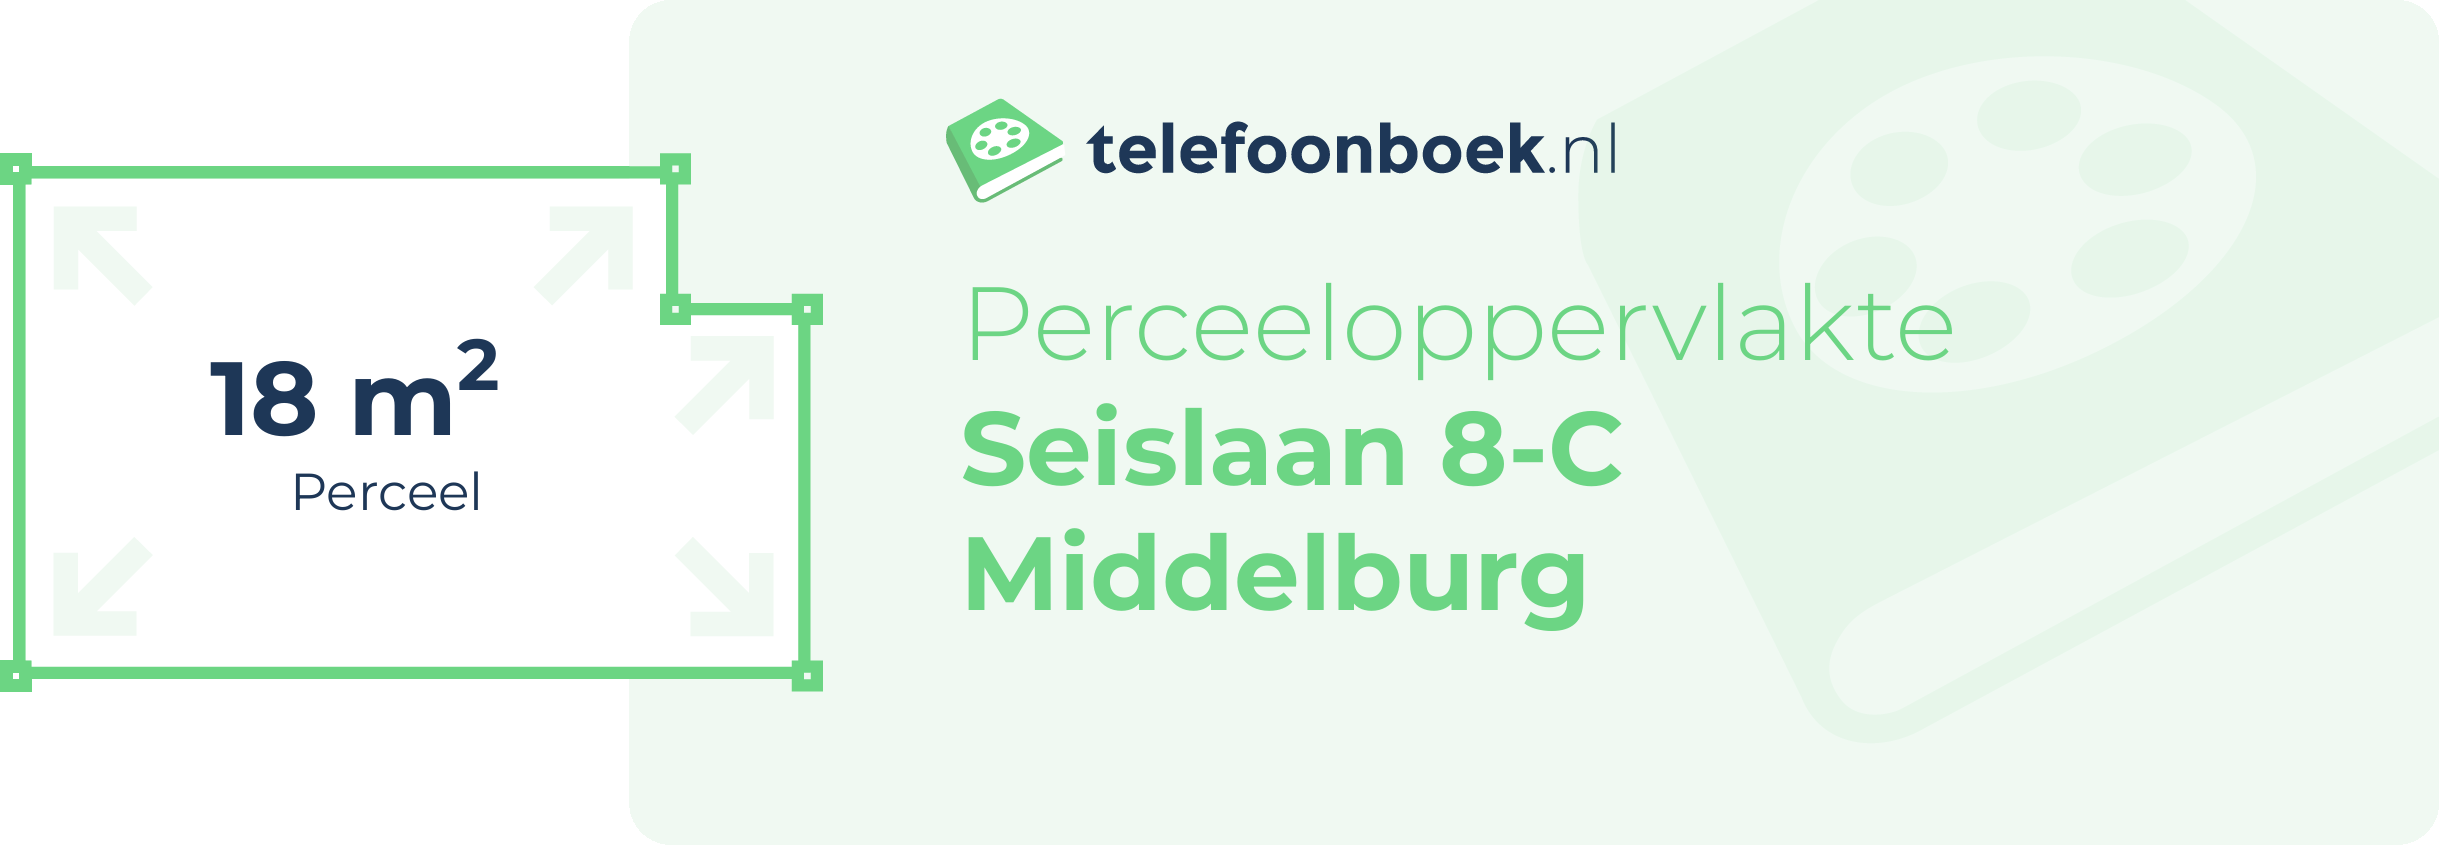 Perceeloppervlakte Seislaan 8-C Middelburg